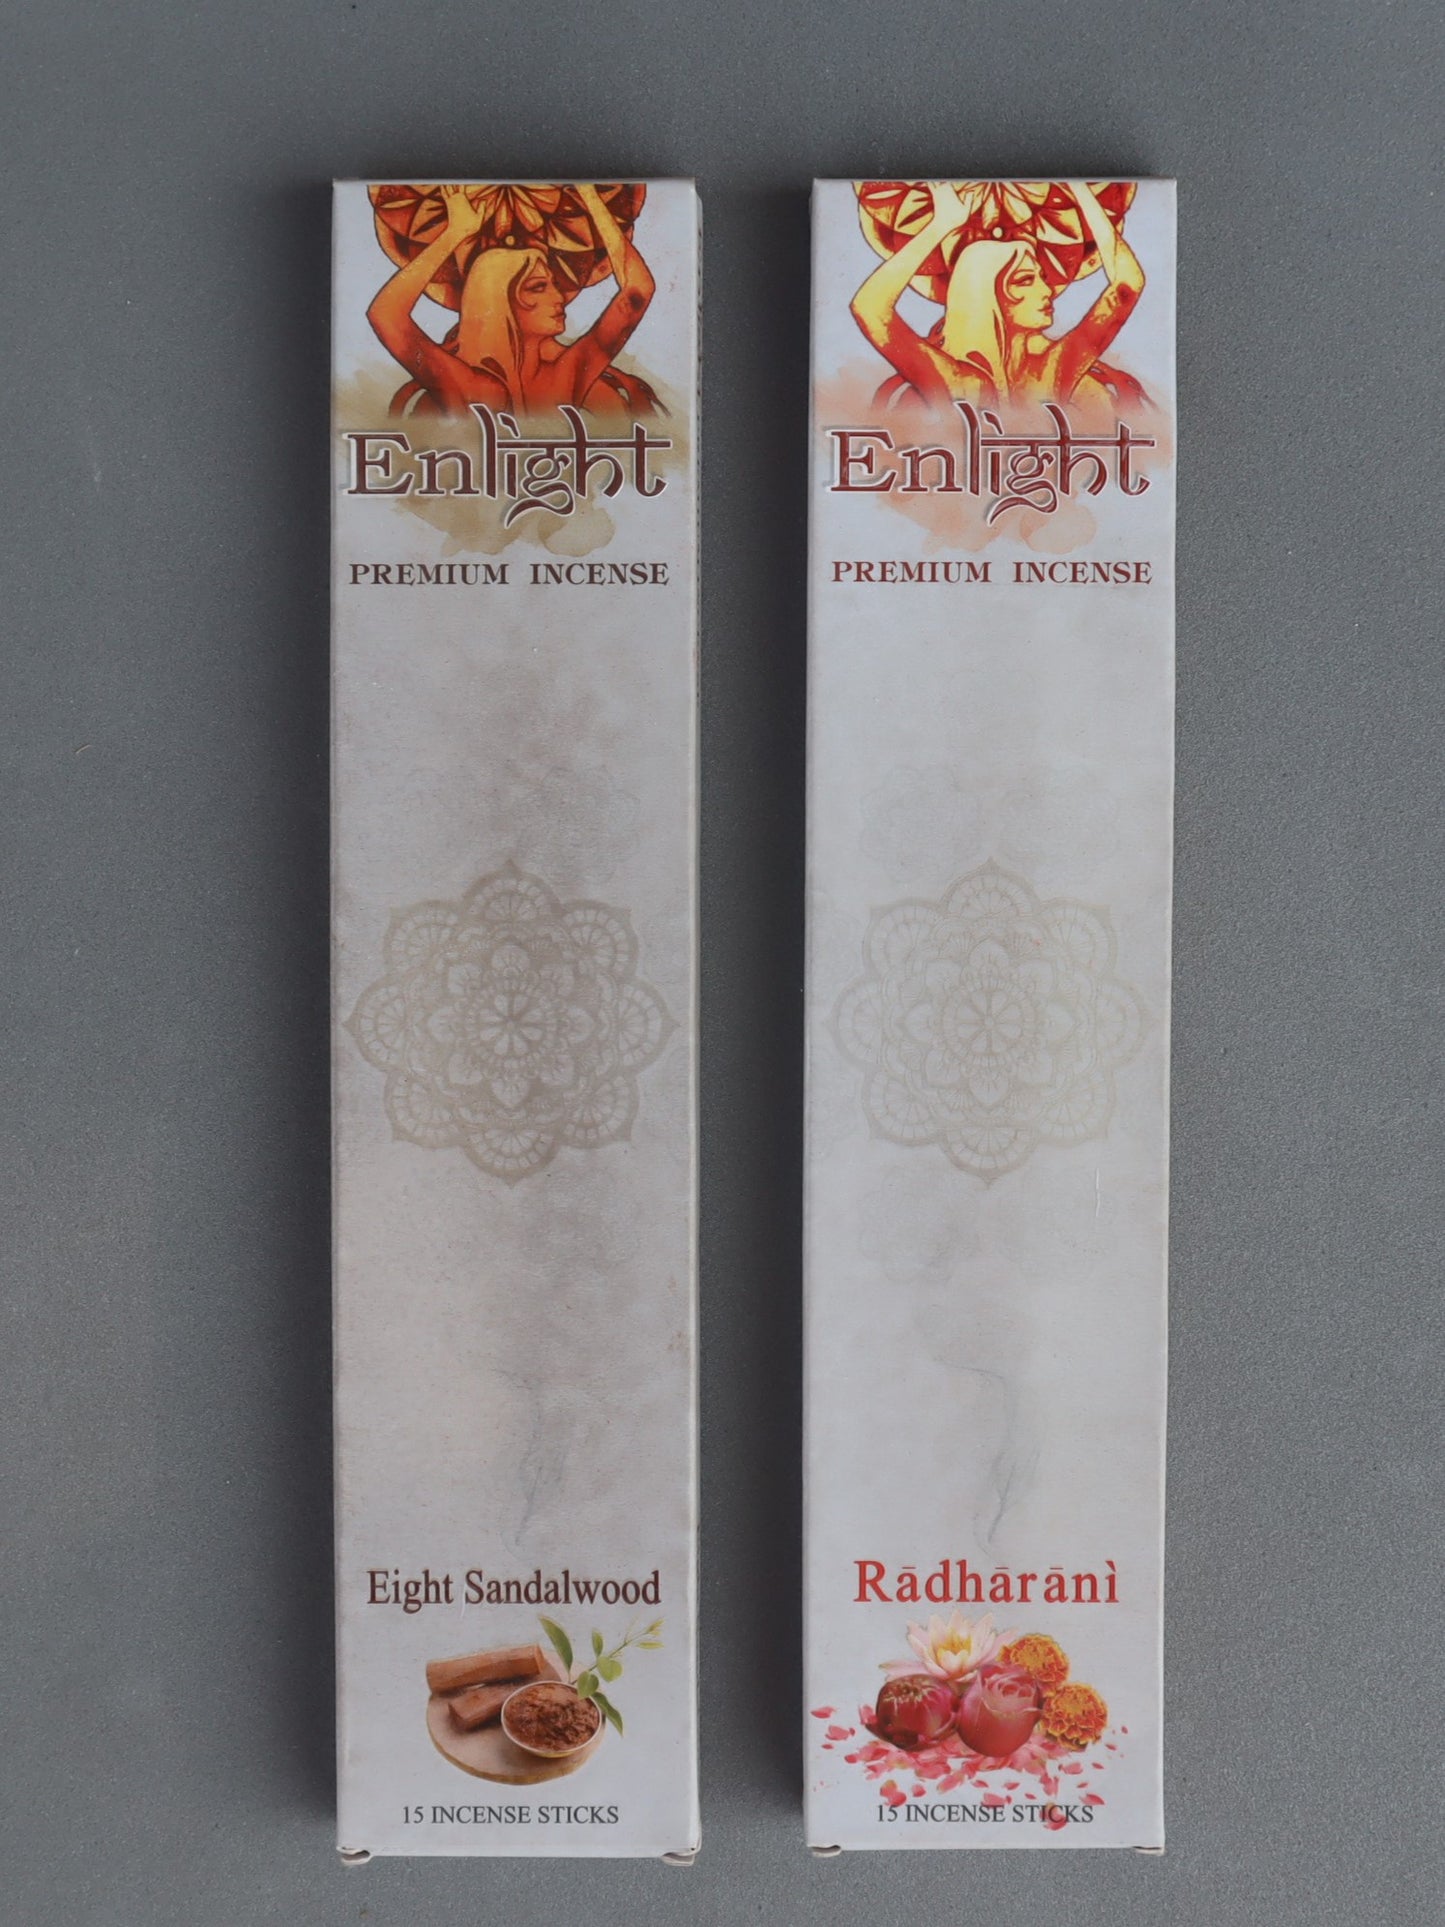 Enlight incense sticks - 3 + 1 free